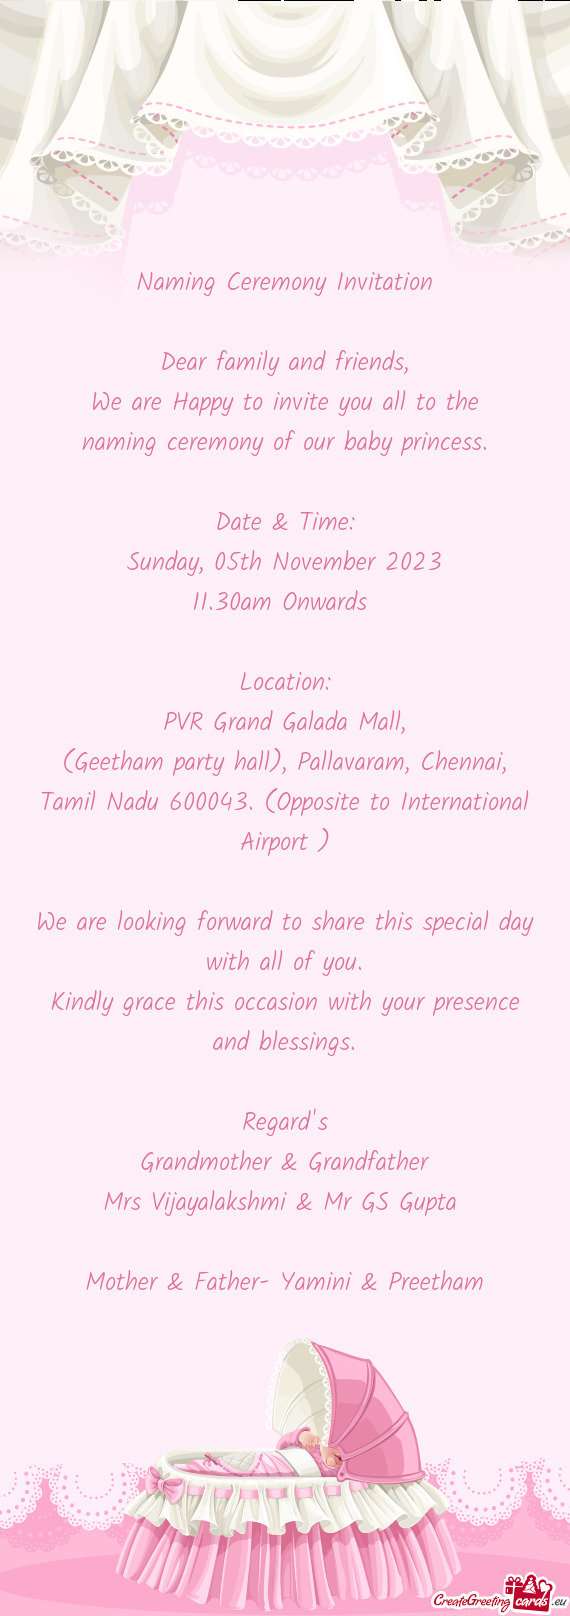 (Geetham party hall), Pallavaram, Chennai, Tamil Nadu 600043. (Opposite to International Airport )